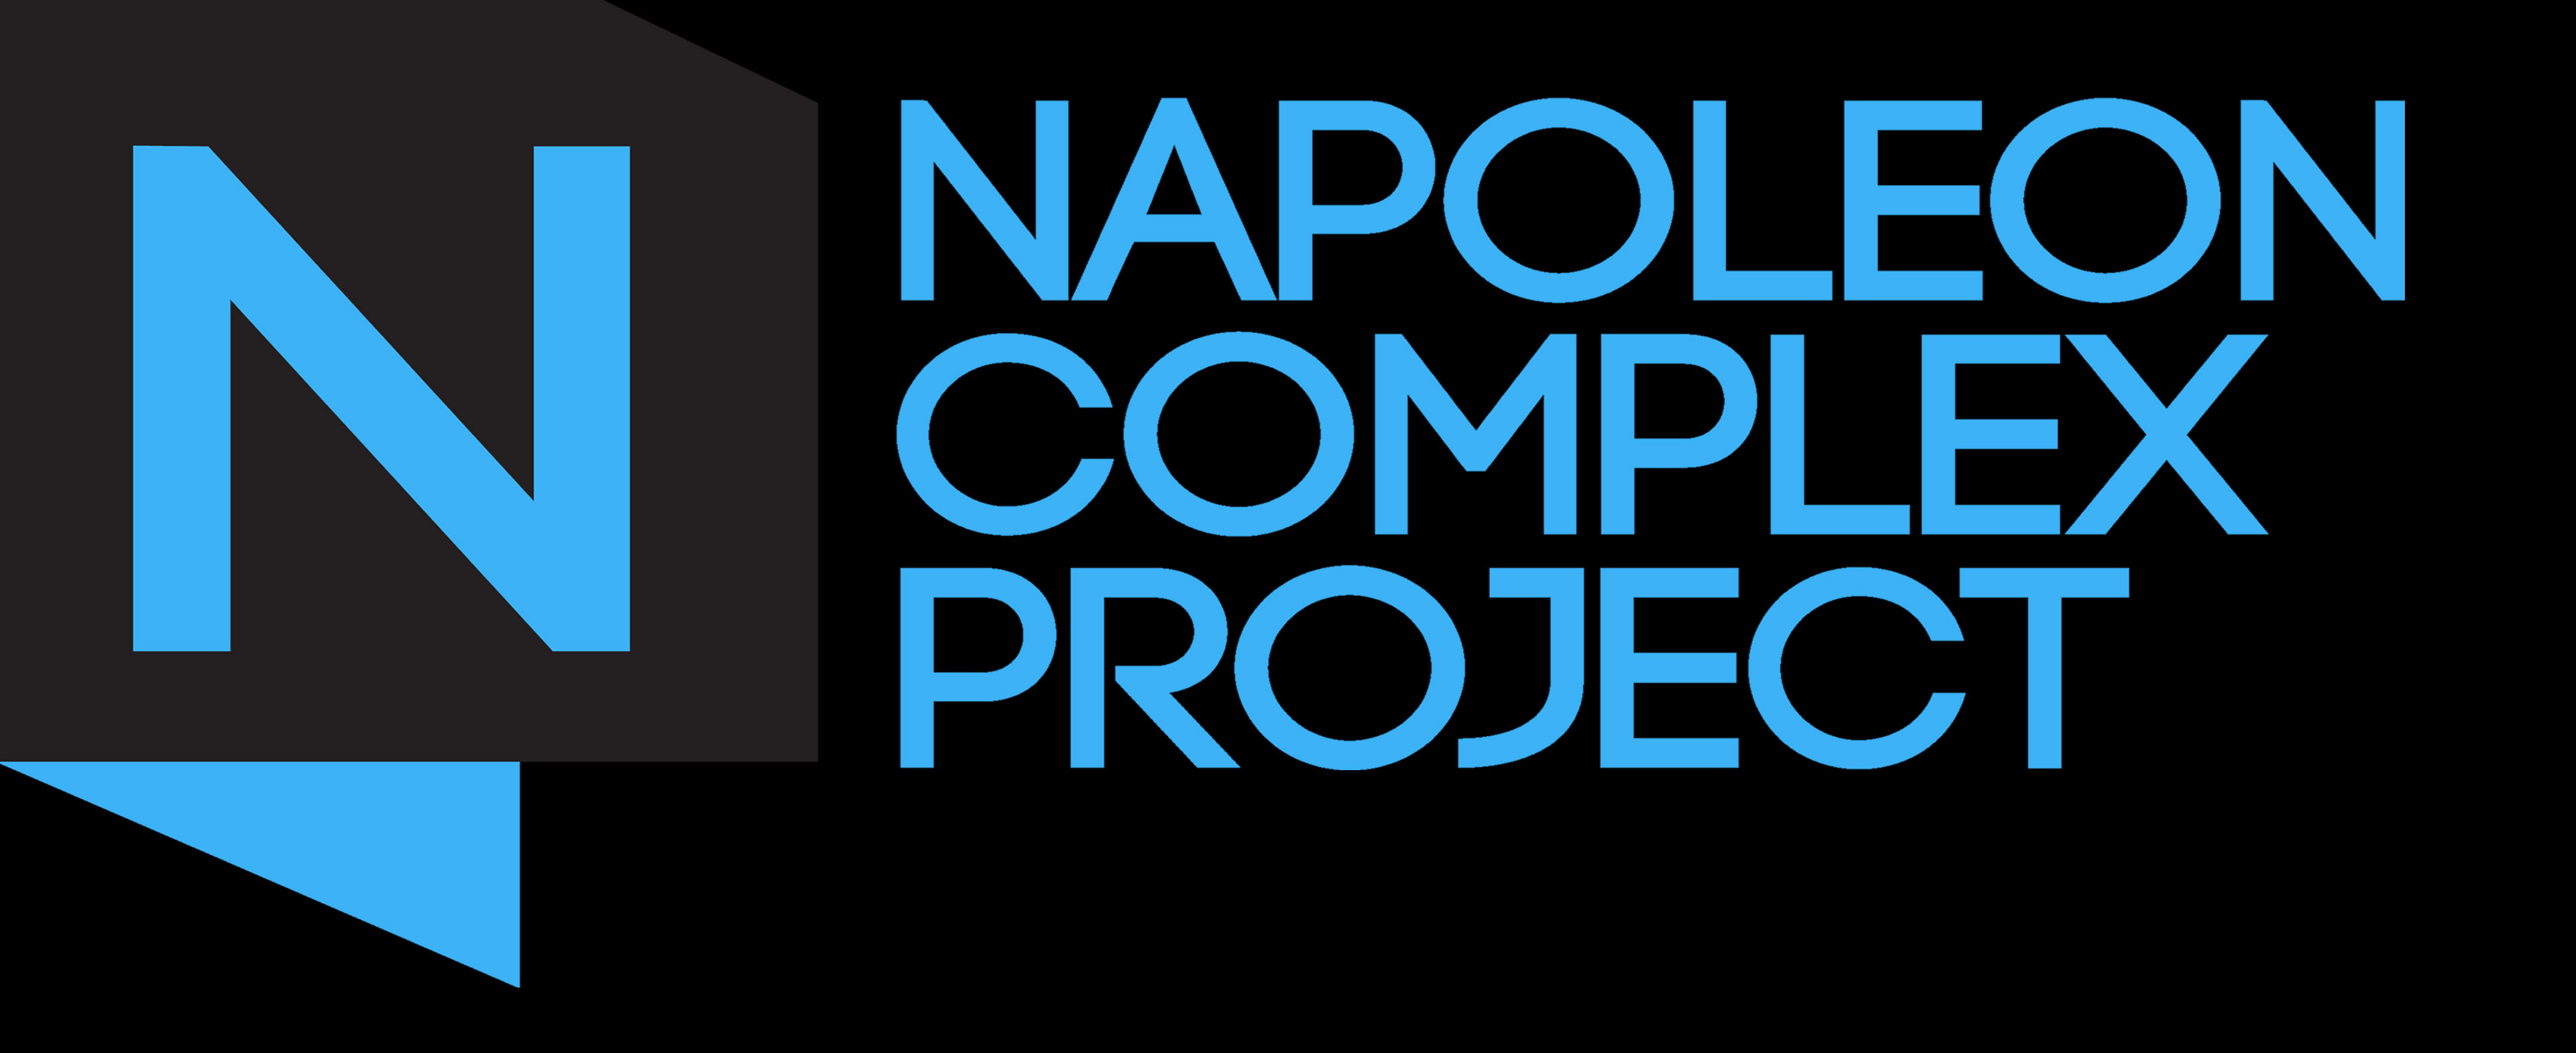 Napoleon Complex Project logo